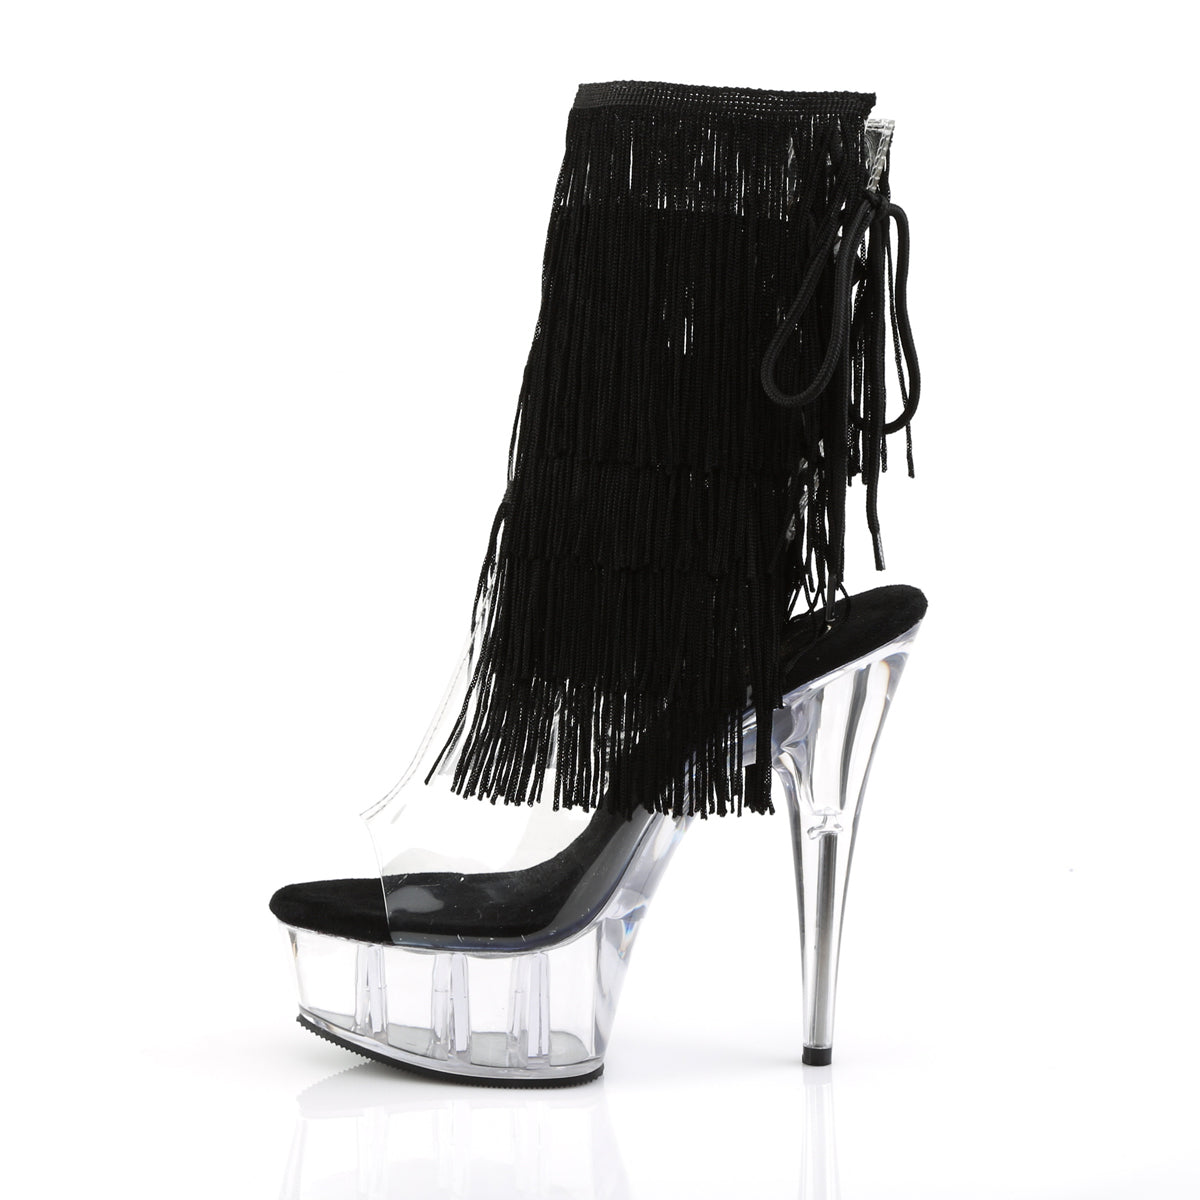 DELIGHT-1017TF 6" Heel Clear Black Pole Dancing Platforms-Pleaser- Sexy Shoes Pole Dance Heels